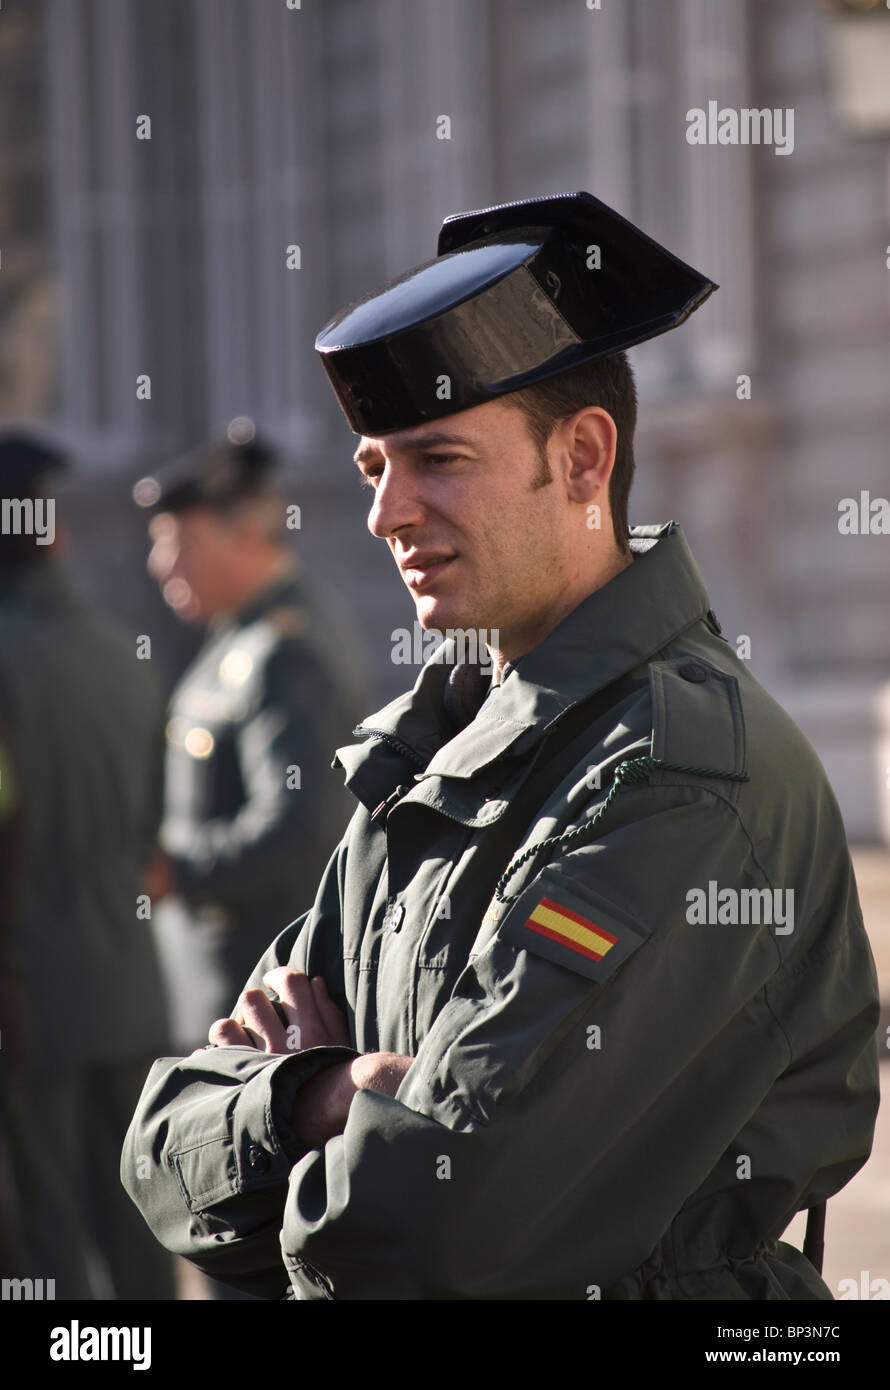 España - Guardia Civil - Casco militar - Tricornio de la Guardia